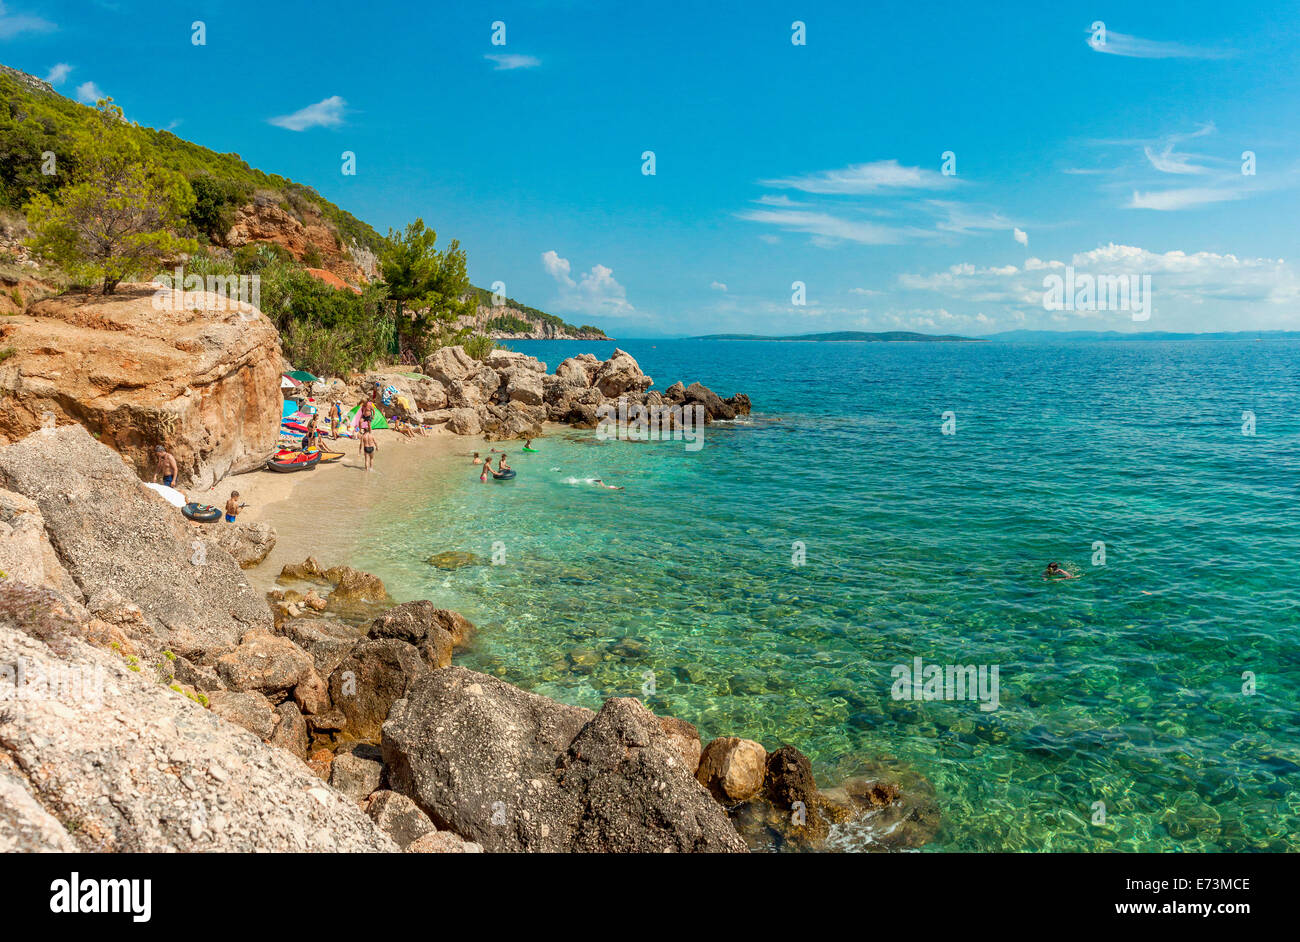 Spiaggia di Sveta Nedilja, isola di Hvar, Croazia Foto Stock